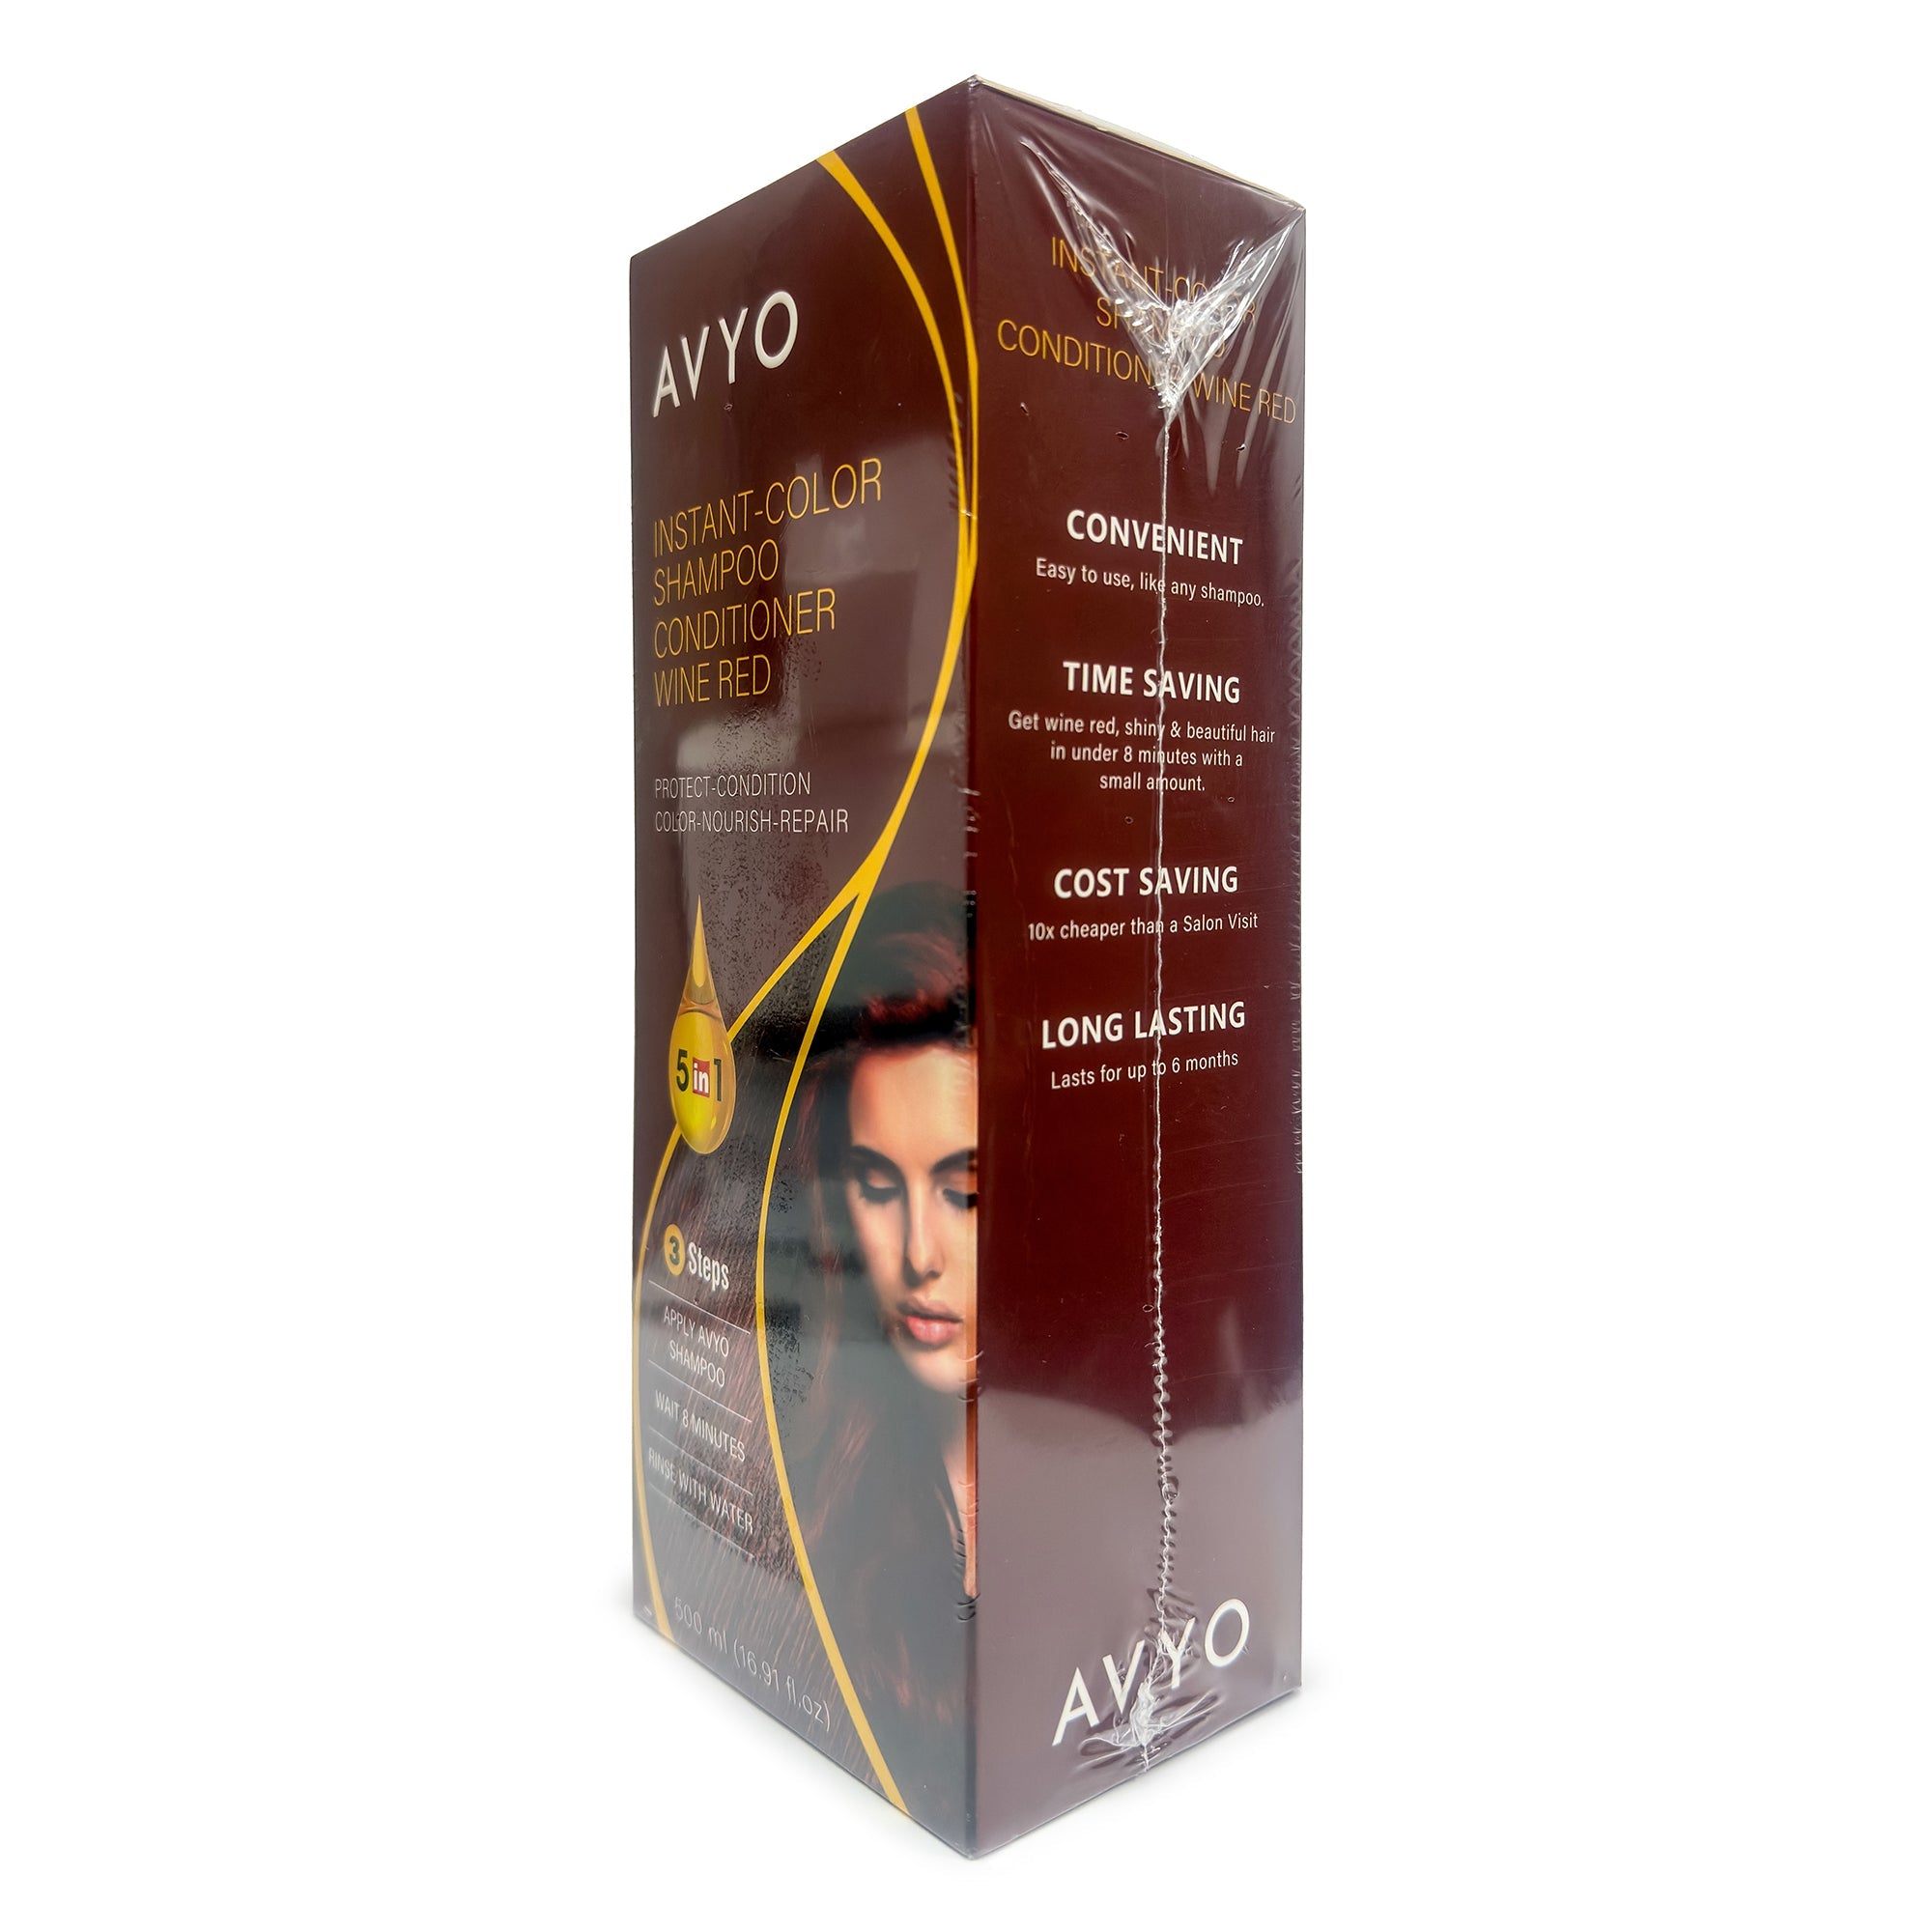 Wine Red | Instant-Color Shampoo Conditioner | 5 in 1 | 500 mL - 16.91 fl.oz. | AVYO - SH Salons